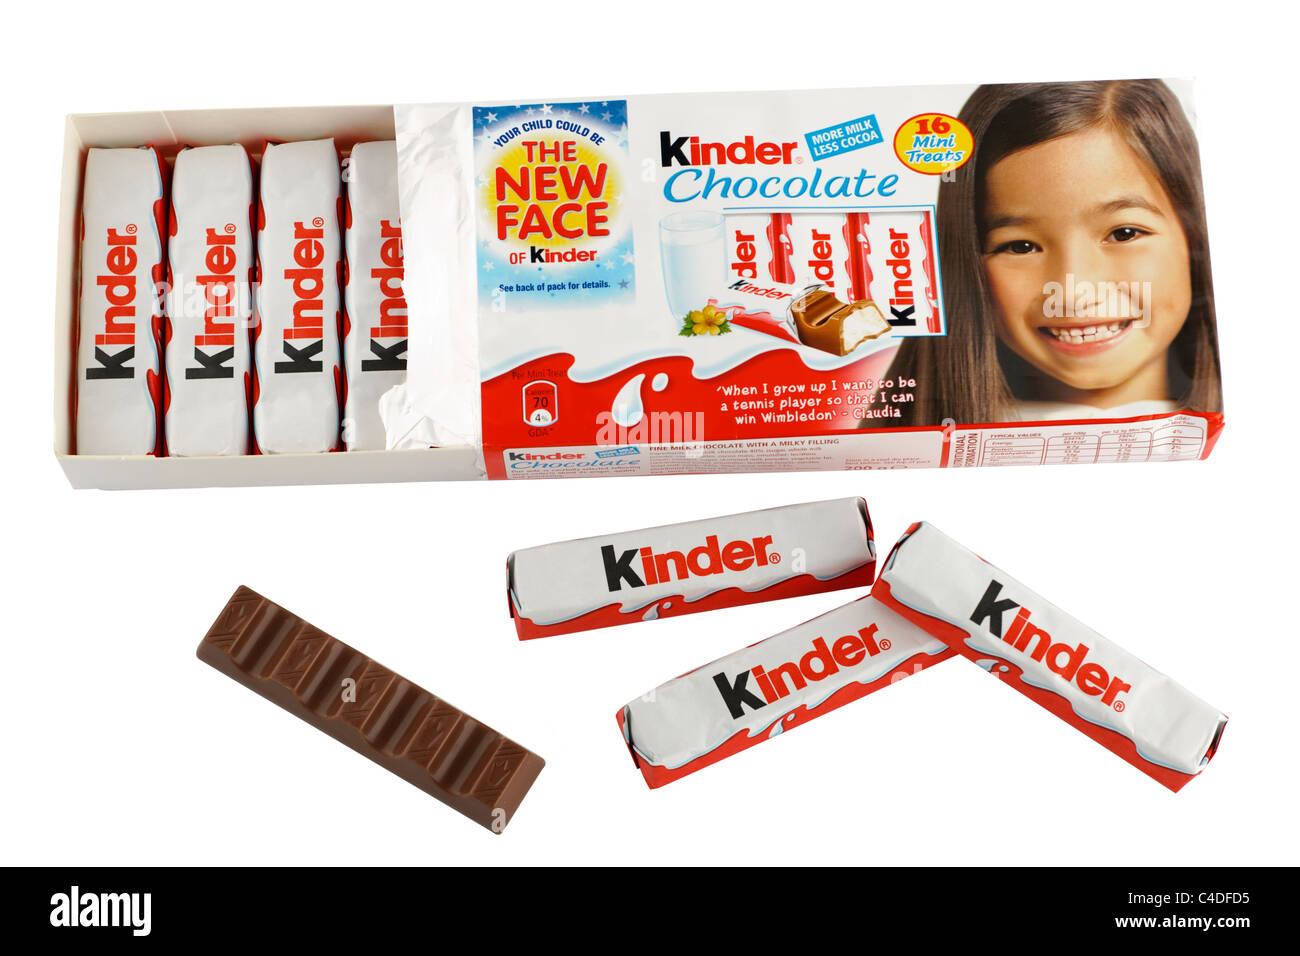 Kinder Chocolate, Chocolate 16 Bars, Kinder Bars, Kinder Chocolate Bars